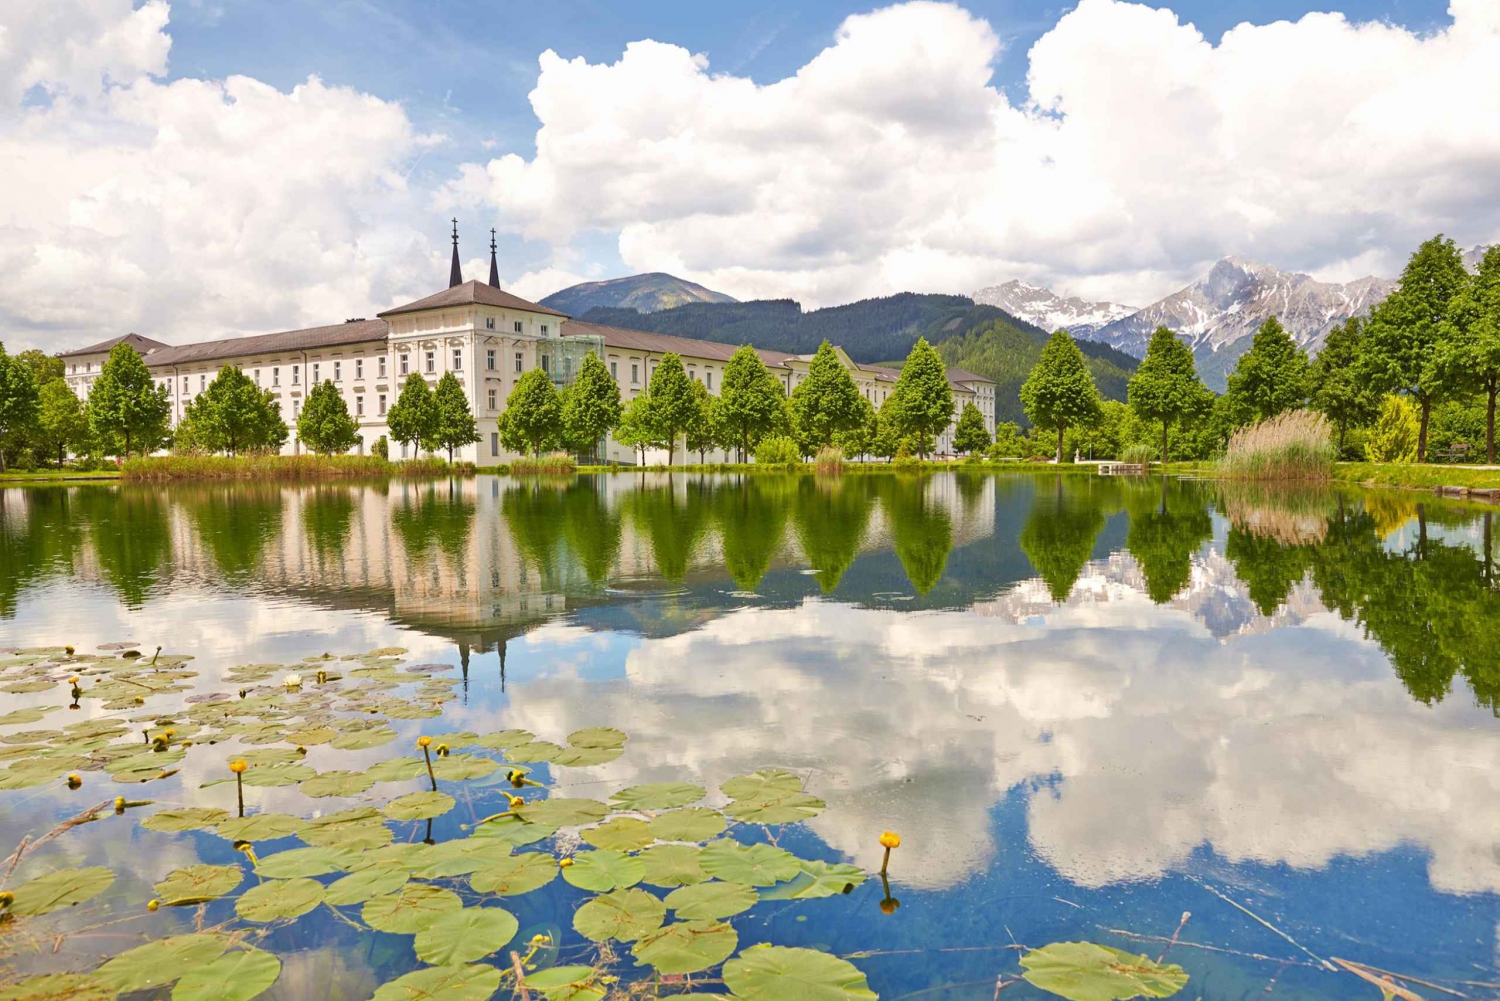 From Vienna: Panoramic Austrian Alps Tour to Hallstatt